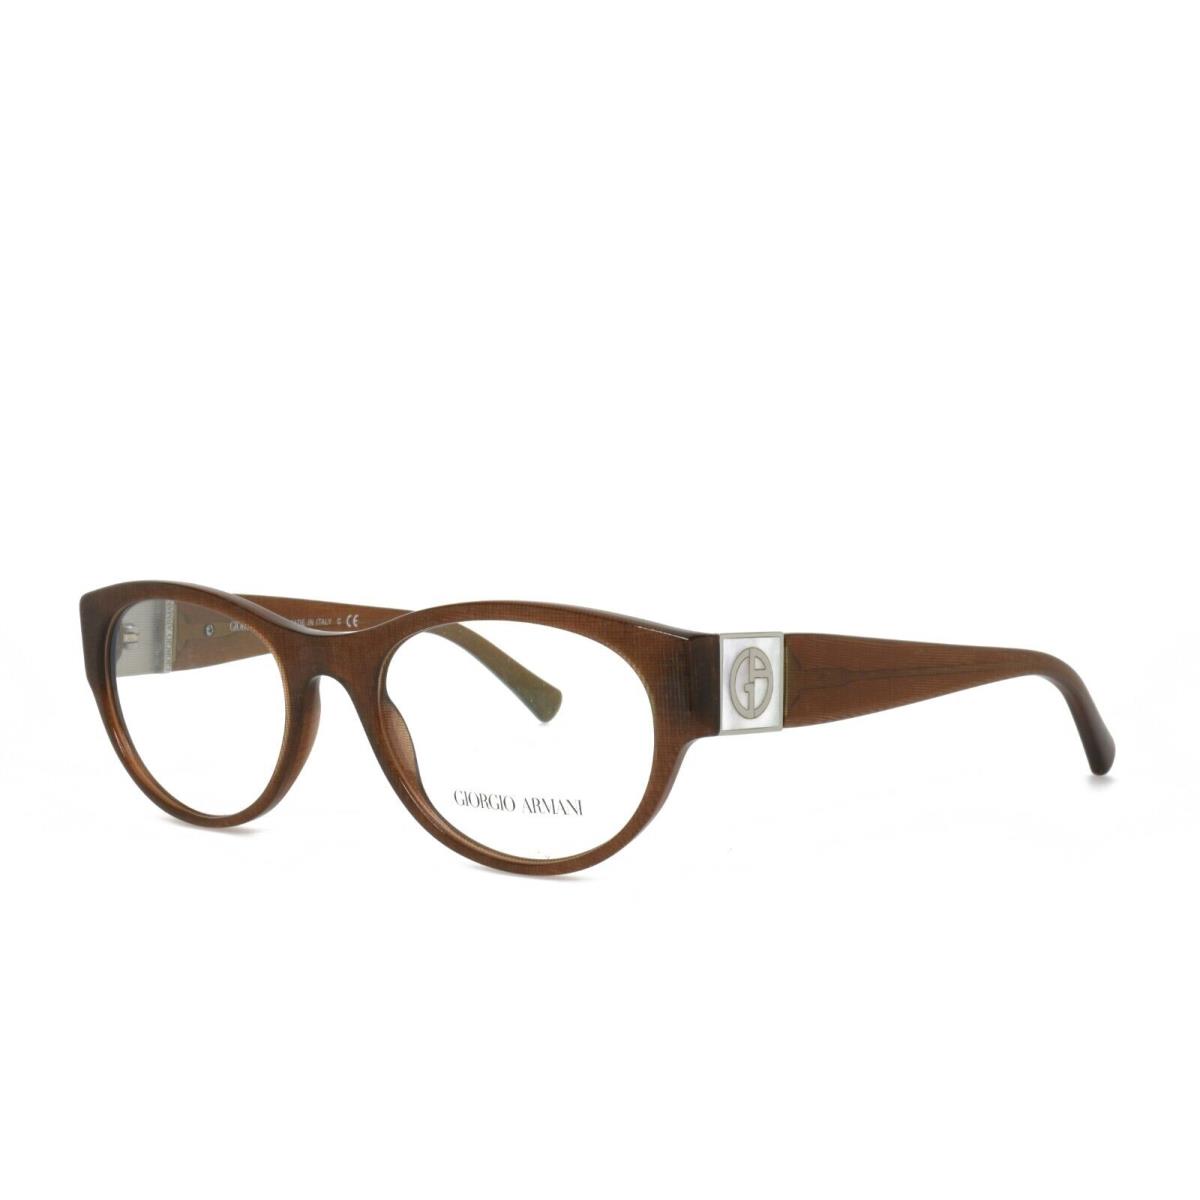 Giorgio Armani 7022H 5155 52-19-140 Brown Eyeglasses Frames